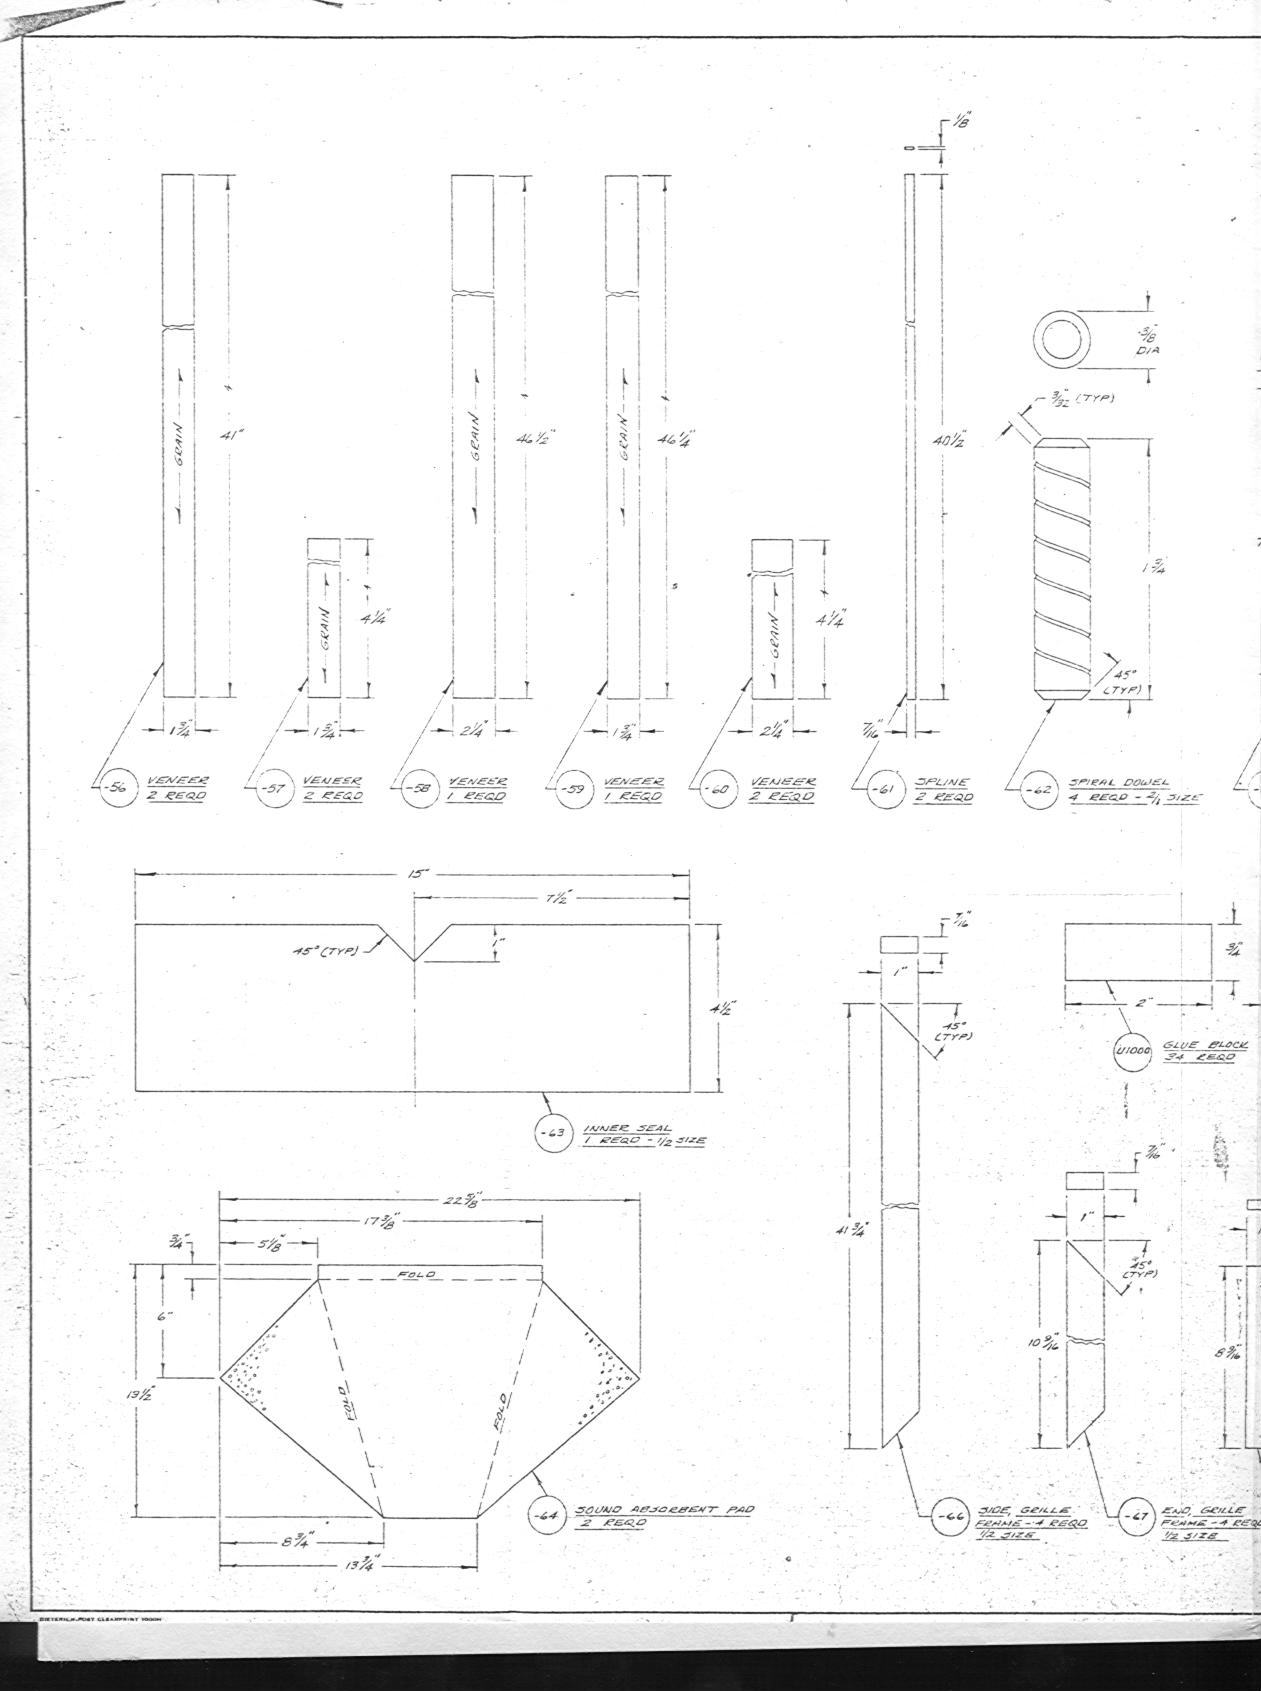 JBL - Hartsfield Cabinet - Drawing 5a